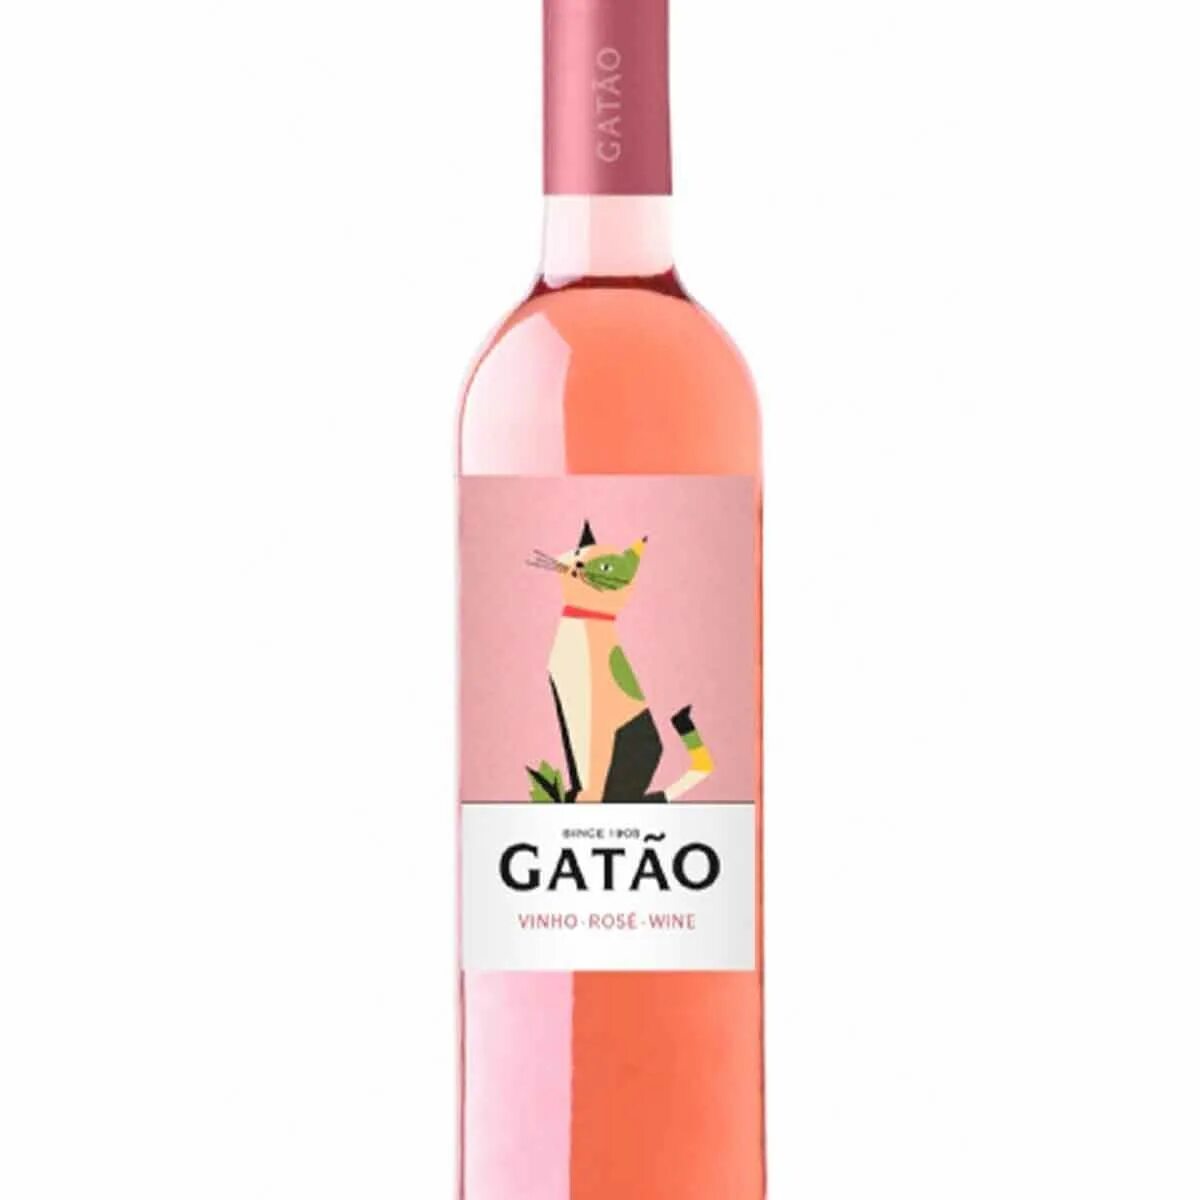 Вина португалии розовое полусухое. Вино gatao Португалия. Вино Гатао Виньо Верде. Вино Португалия gatao розовое. Вино Виньо Верде розовое полусухое.